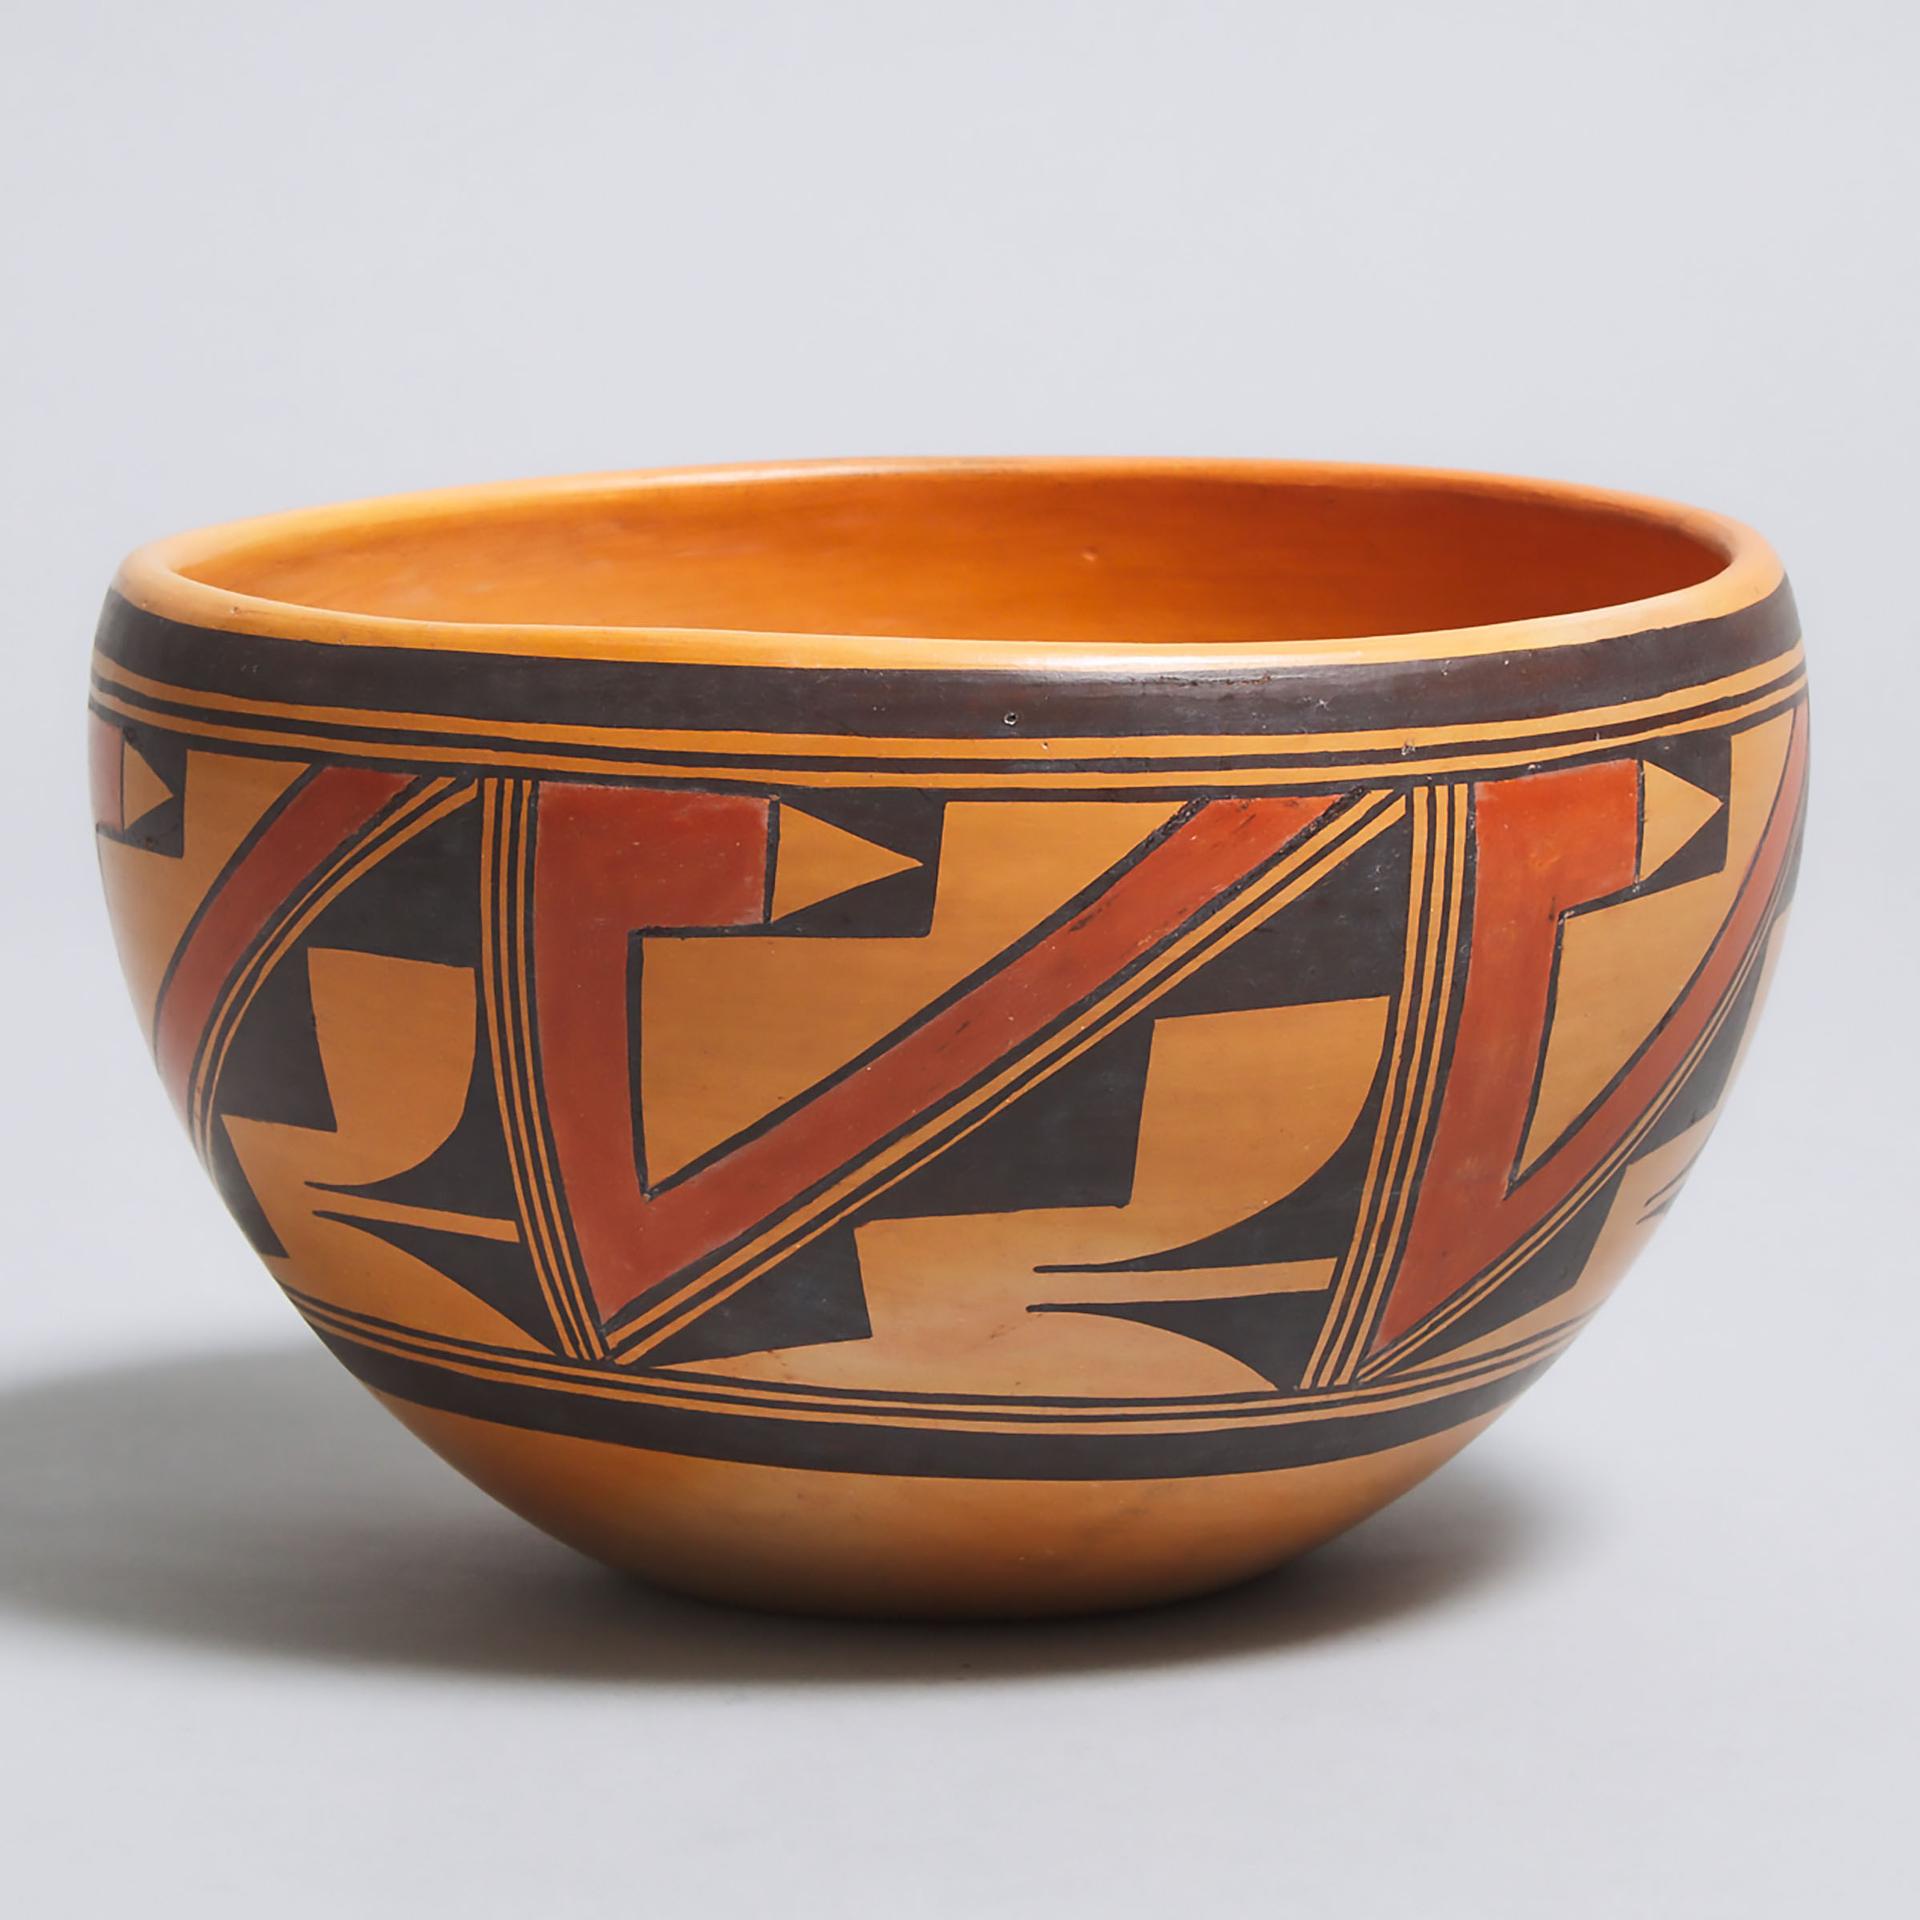 Verla Dewakuku (1932) - Hopi Pueblo Coiled Pottery Bowl, 1970